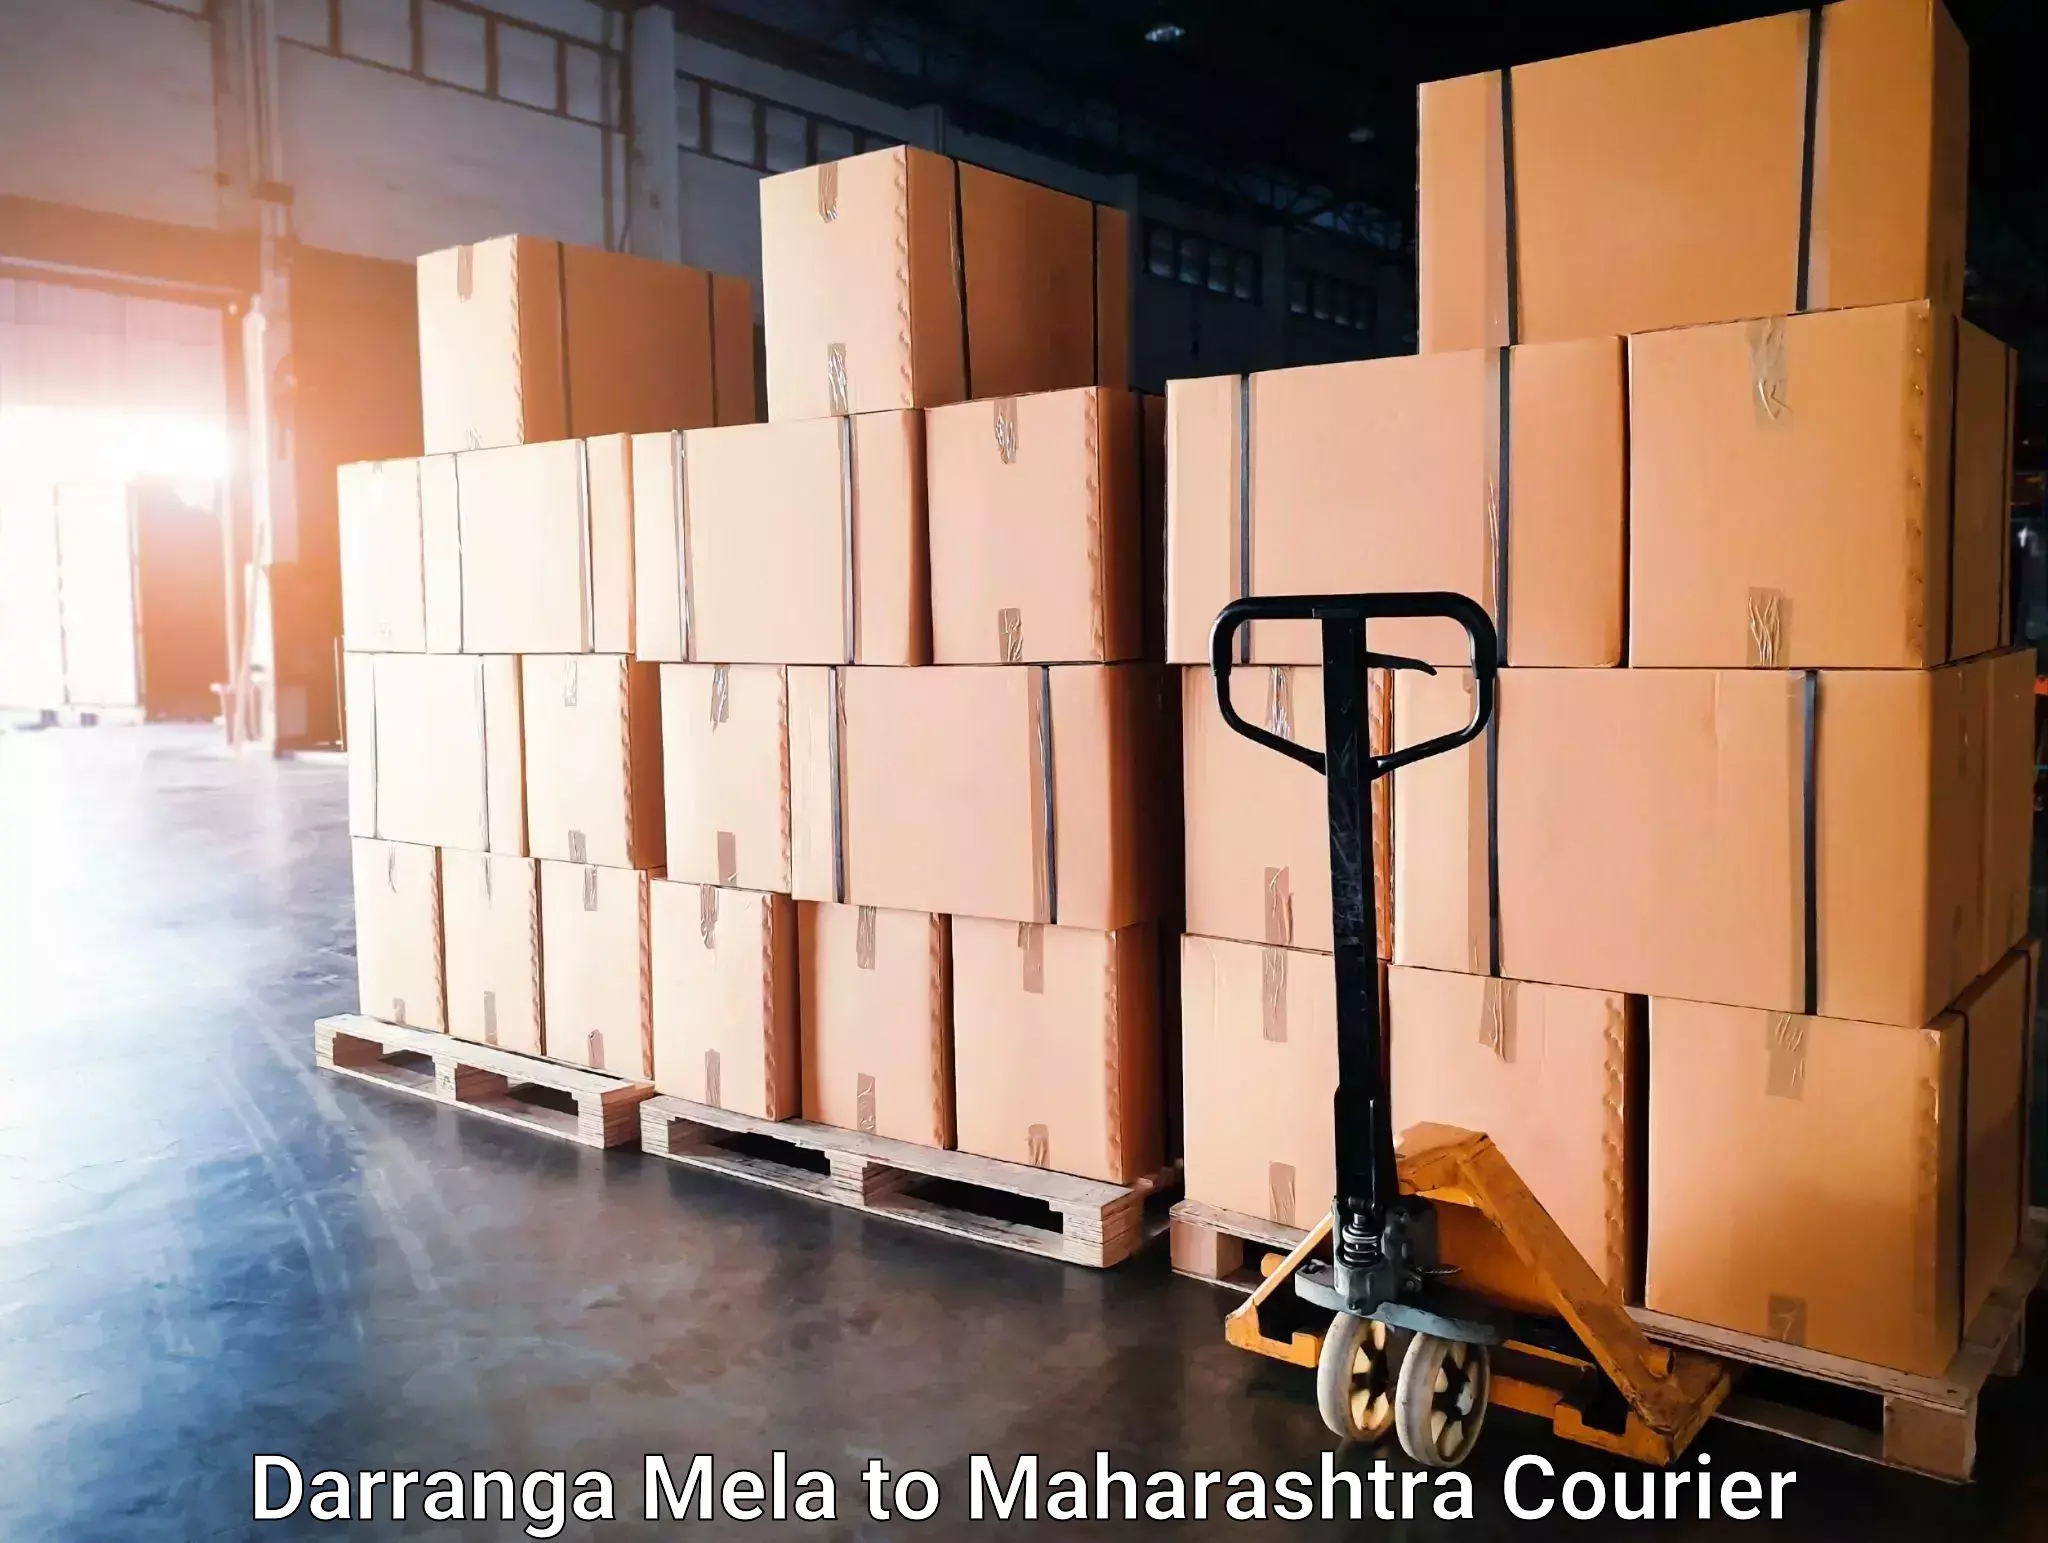 Next-day freight services Darranga Mela to Maharashtra